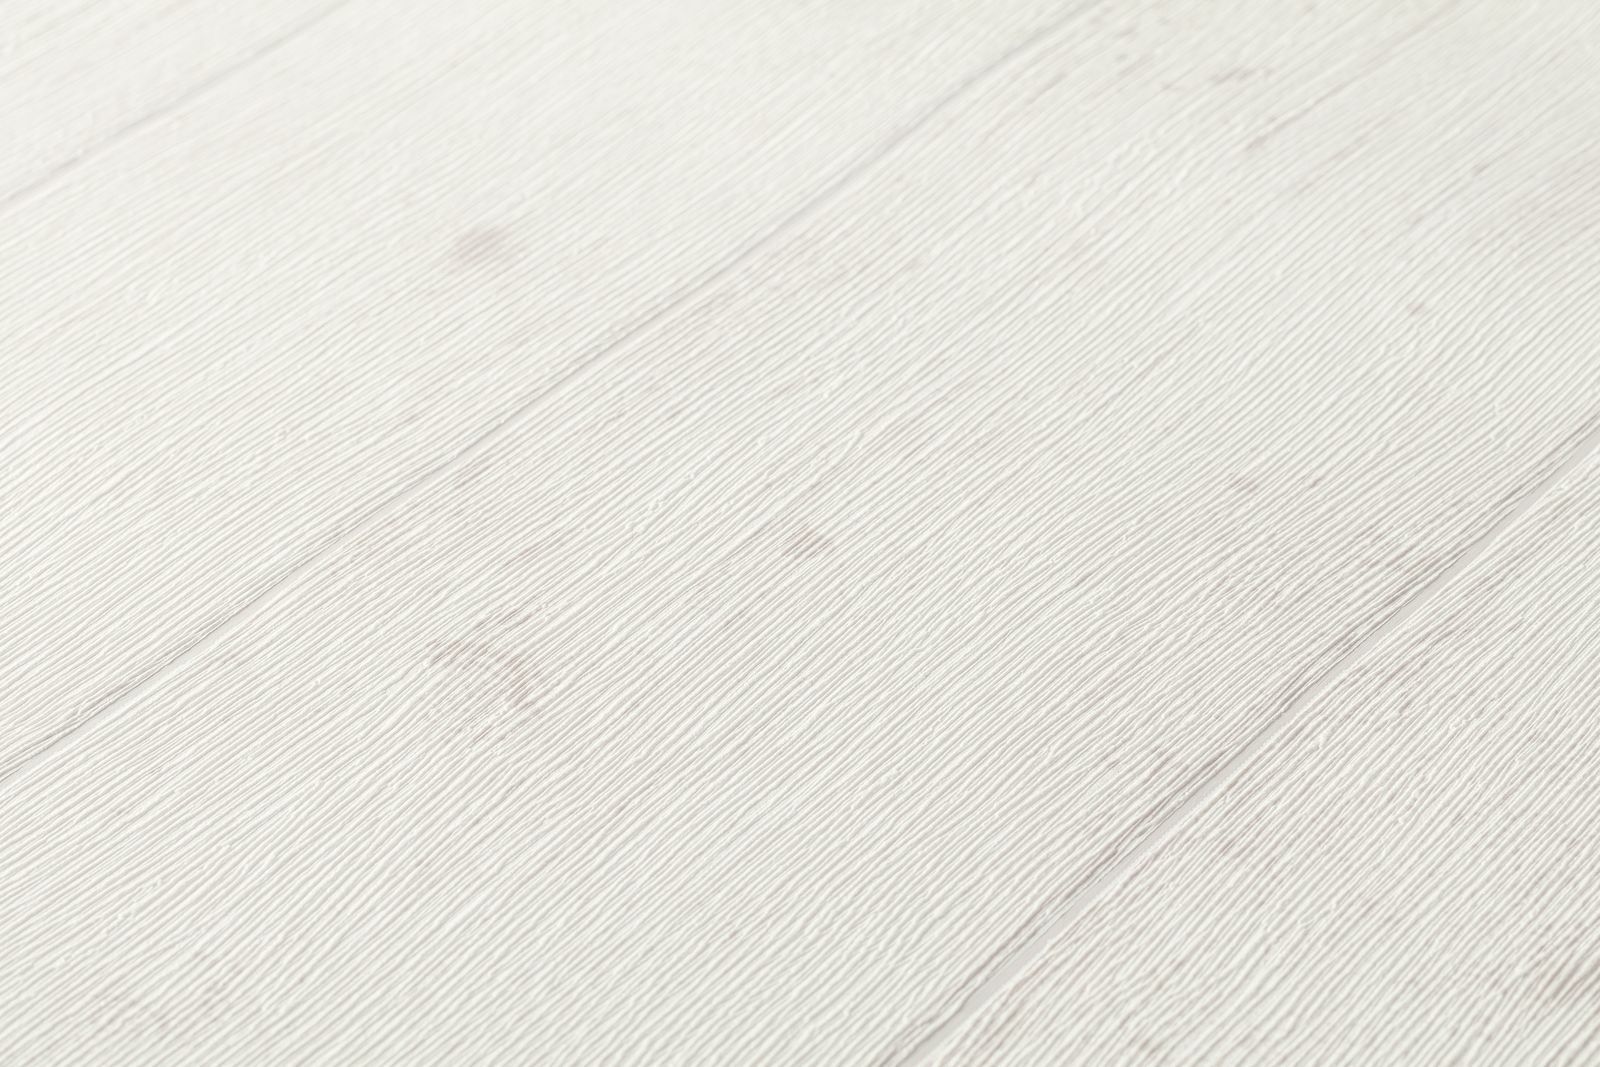 Vliestapete Holz-Optik Planken Holzbrett weiß AS Creation 8550-46 (3,131qm)